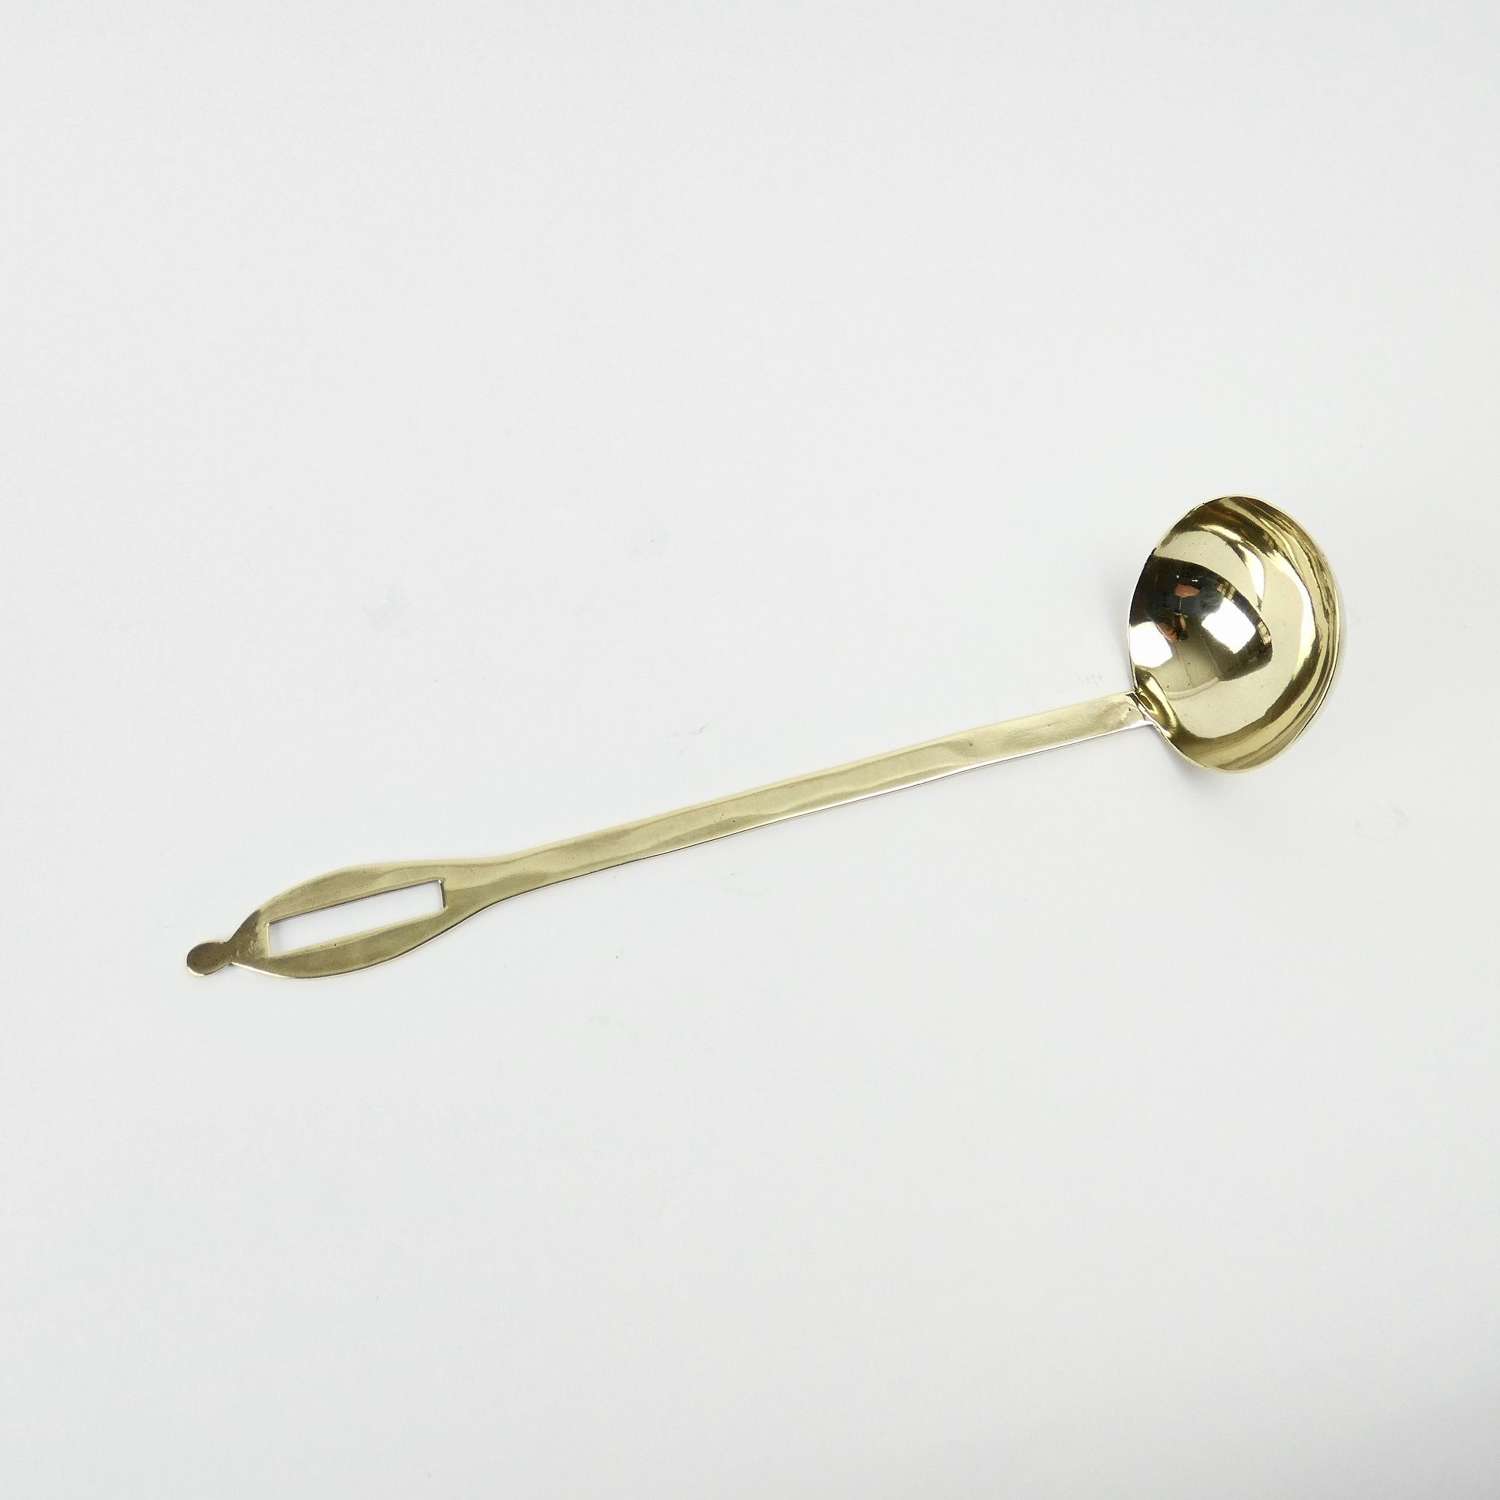 18th century, cast brass ladle